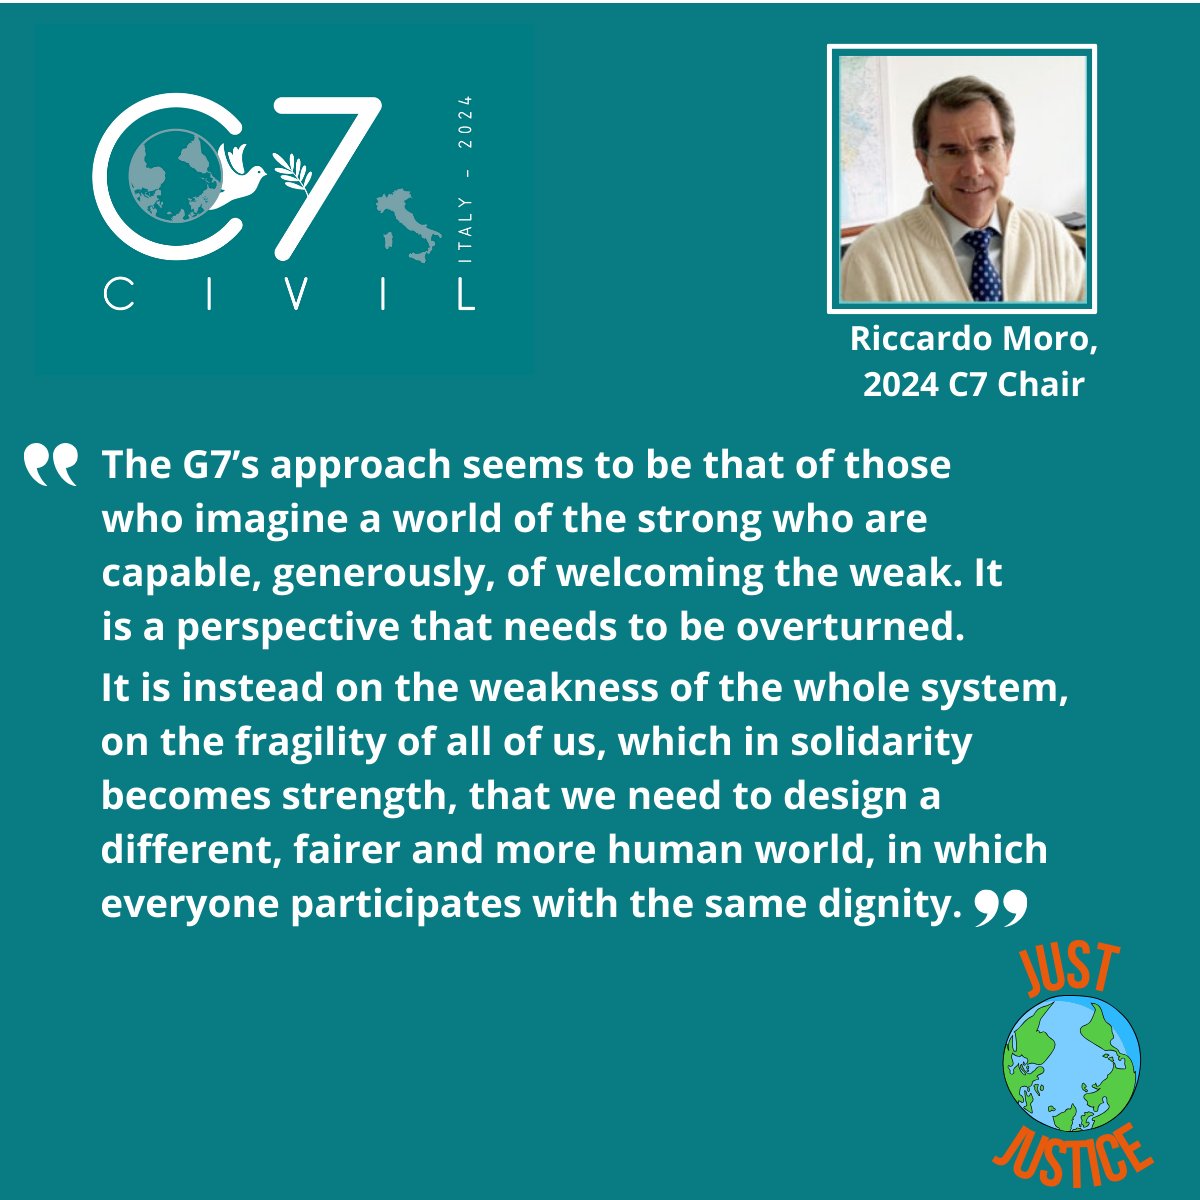 ⭕️ 𝐉𝐔𝐒𝐓 social, environmental and economic 𝐉𝐔𝐒𝐓𝐈𝐂𝐄 ⭕️ 👇
#civil72024, #civil7italy, #civil7ita, #g7ita, #G7Italy, #g72024, #JustJustice